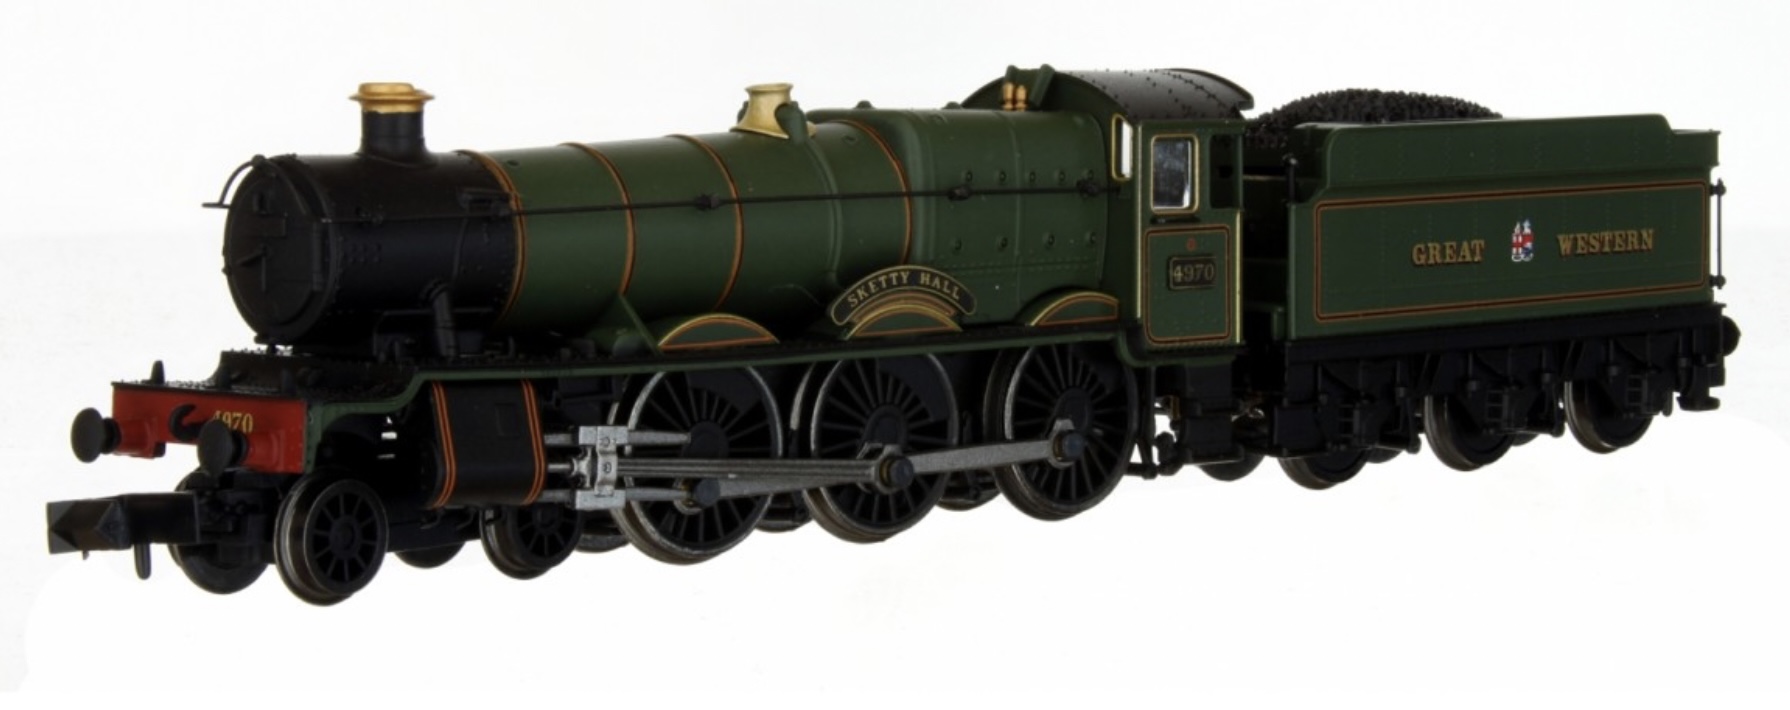 N Scale - Dapol - 2S-010-007 - Locomotive, Steam, 4-6-0 , 4900 Class Hall - Great Western - 4970